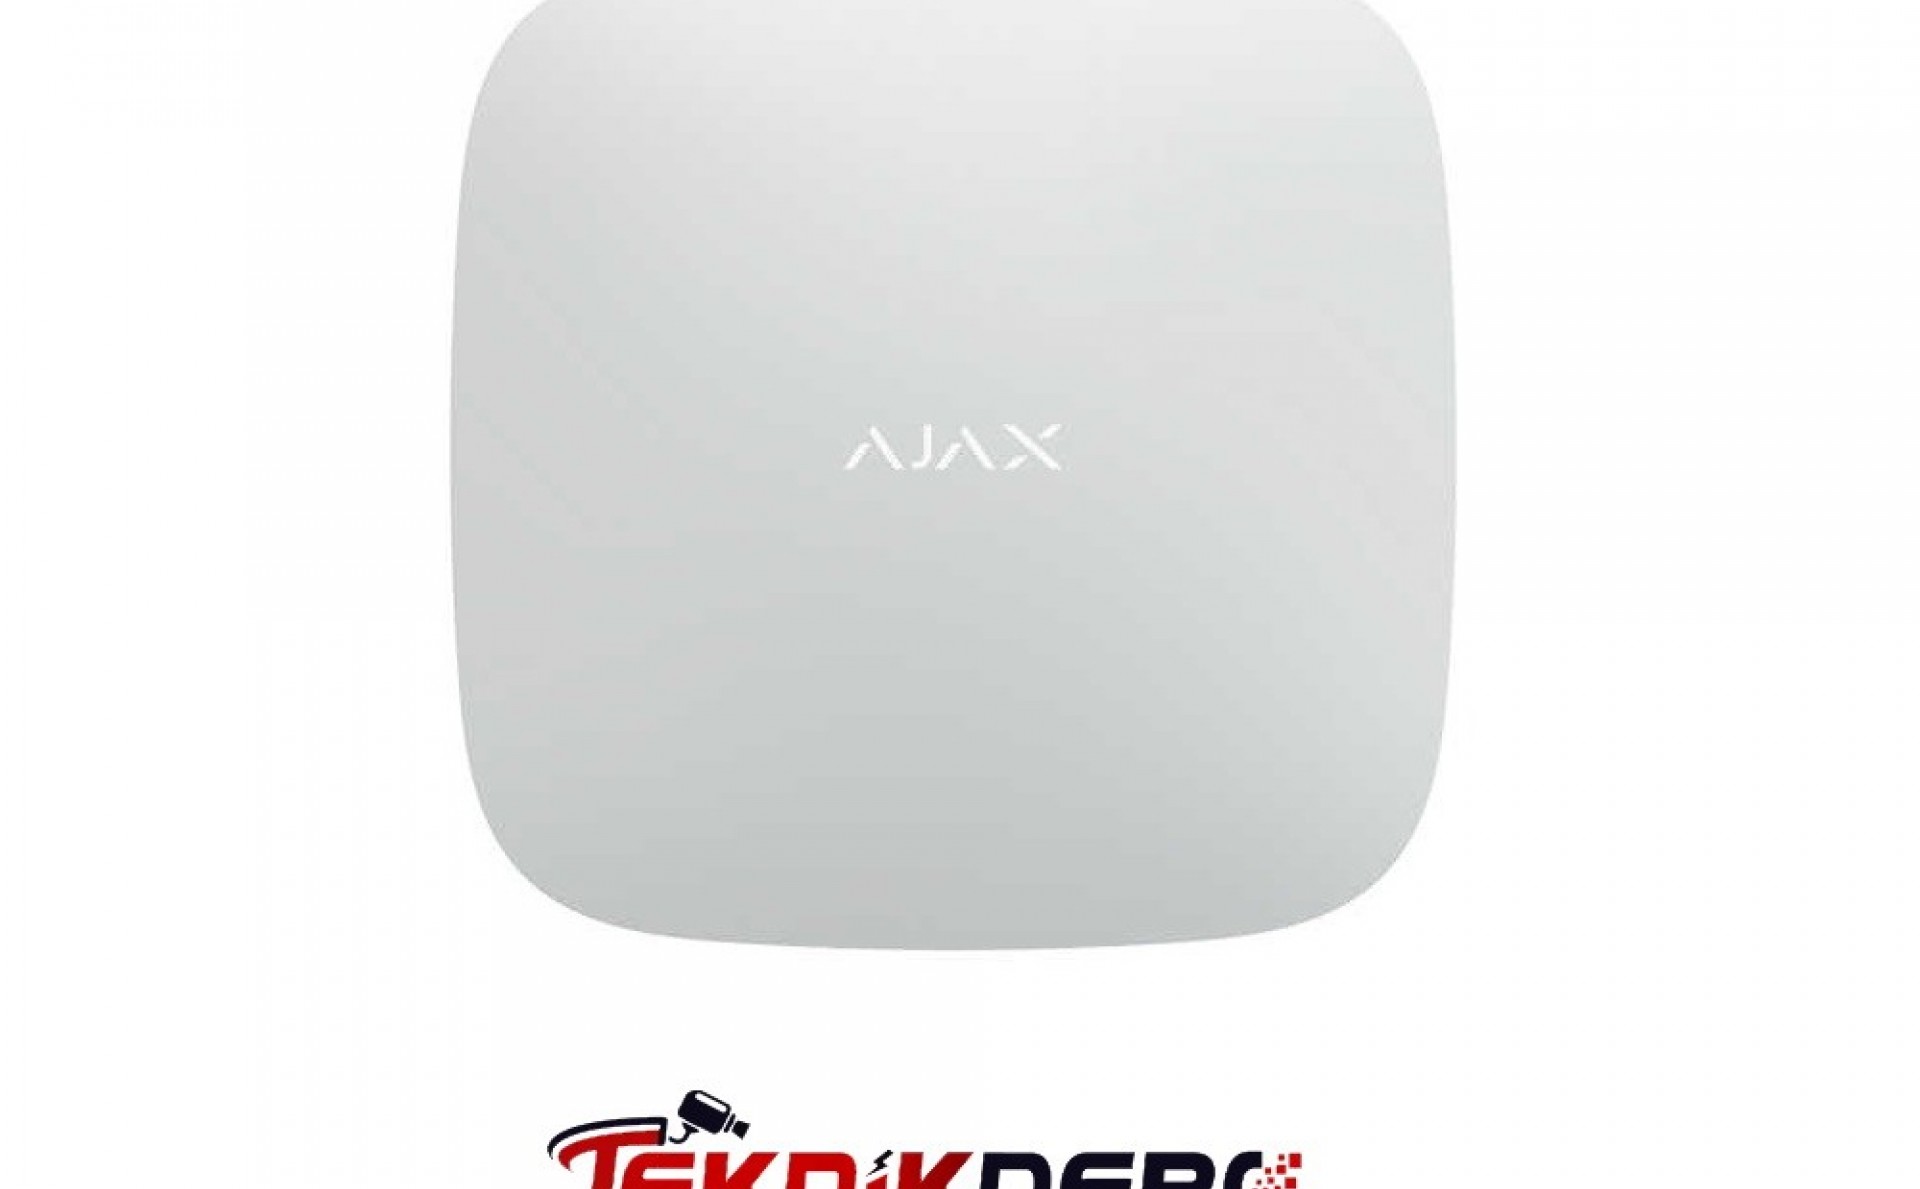  AJAX Kablosuz Akıllı Alarm Paneli